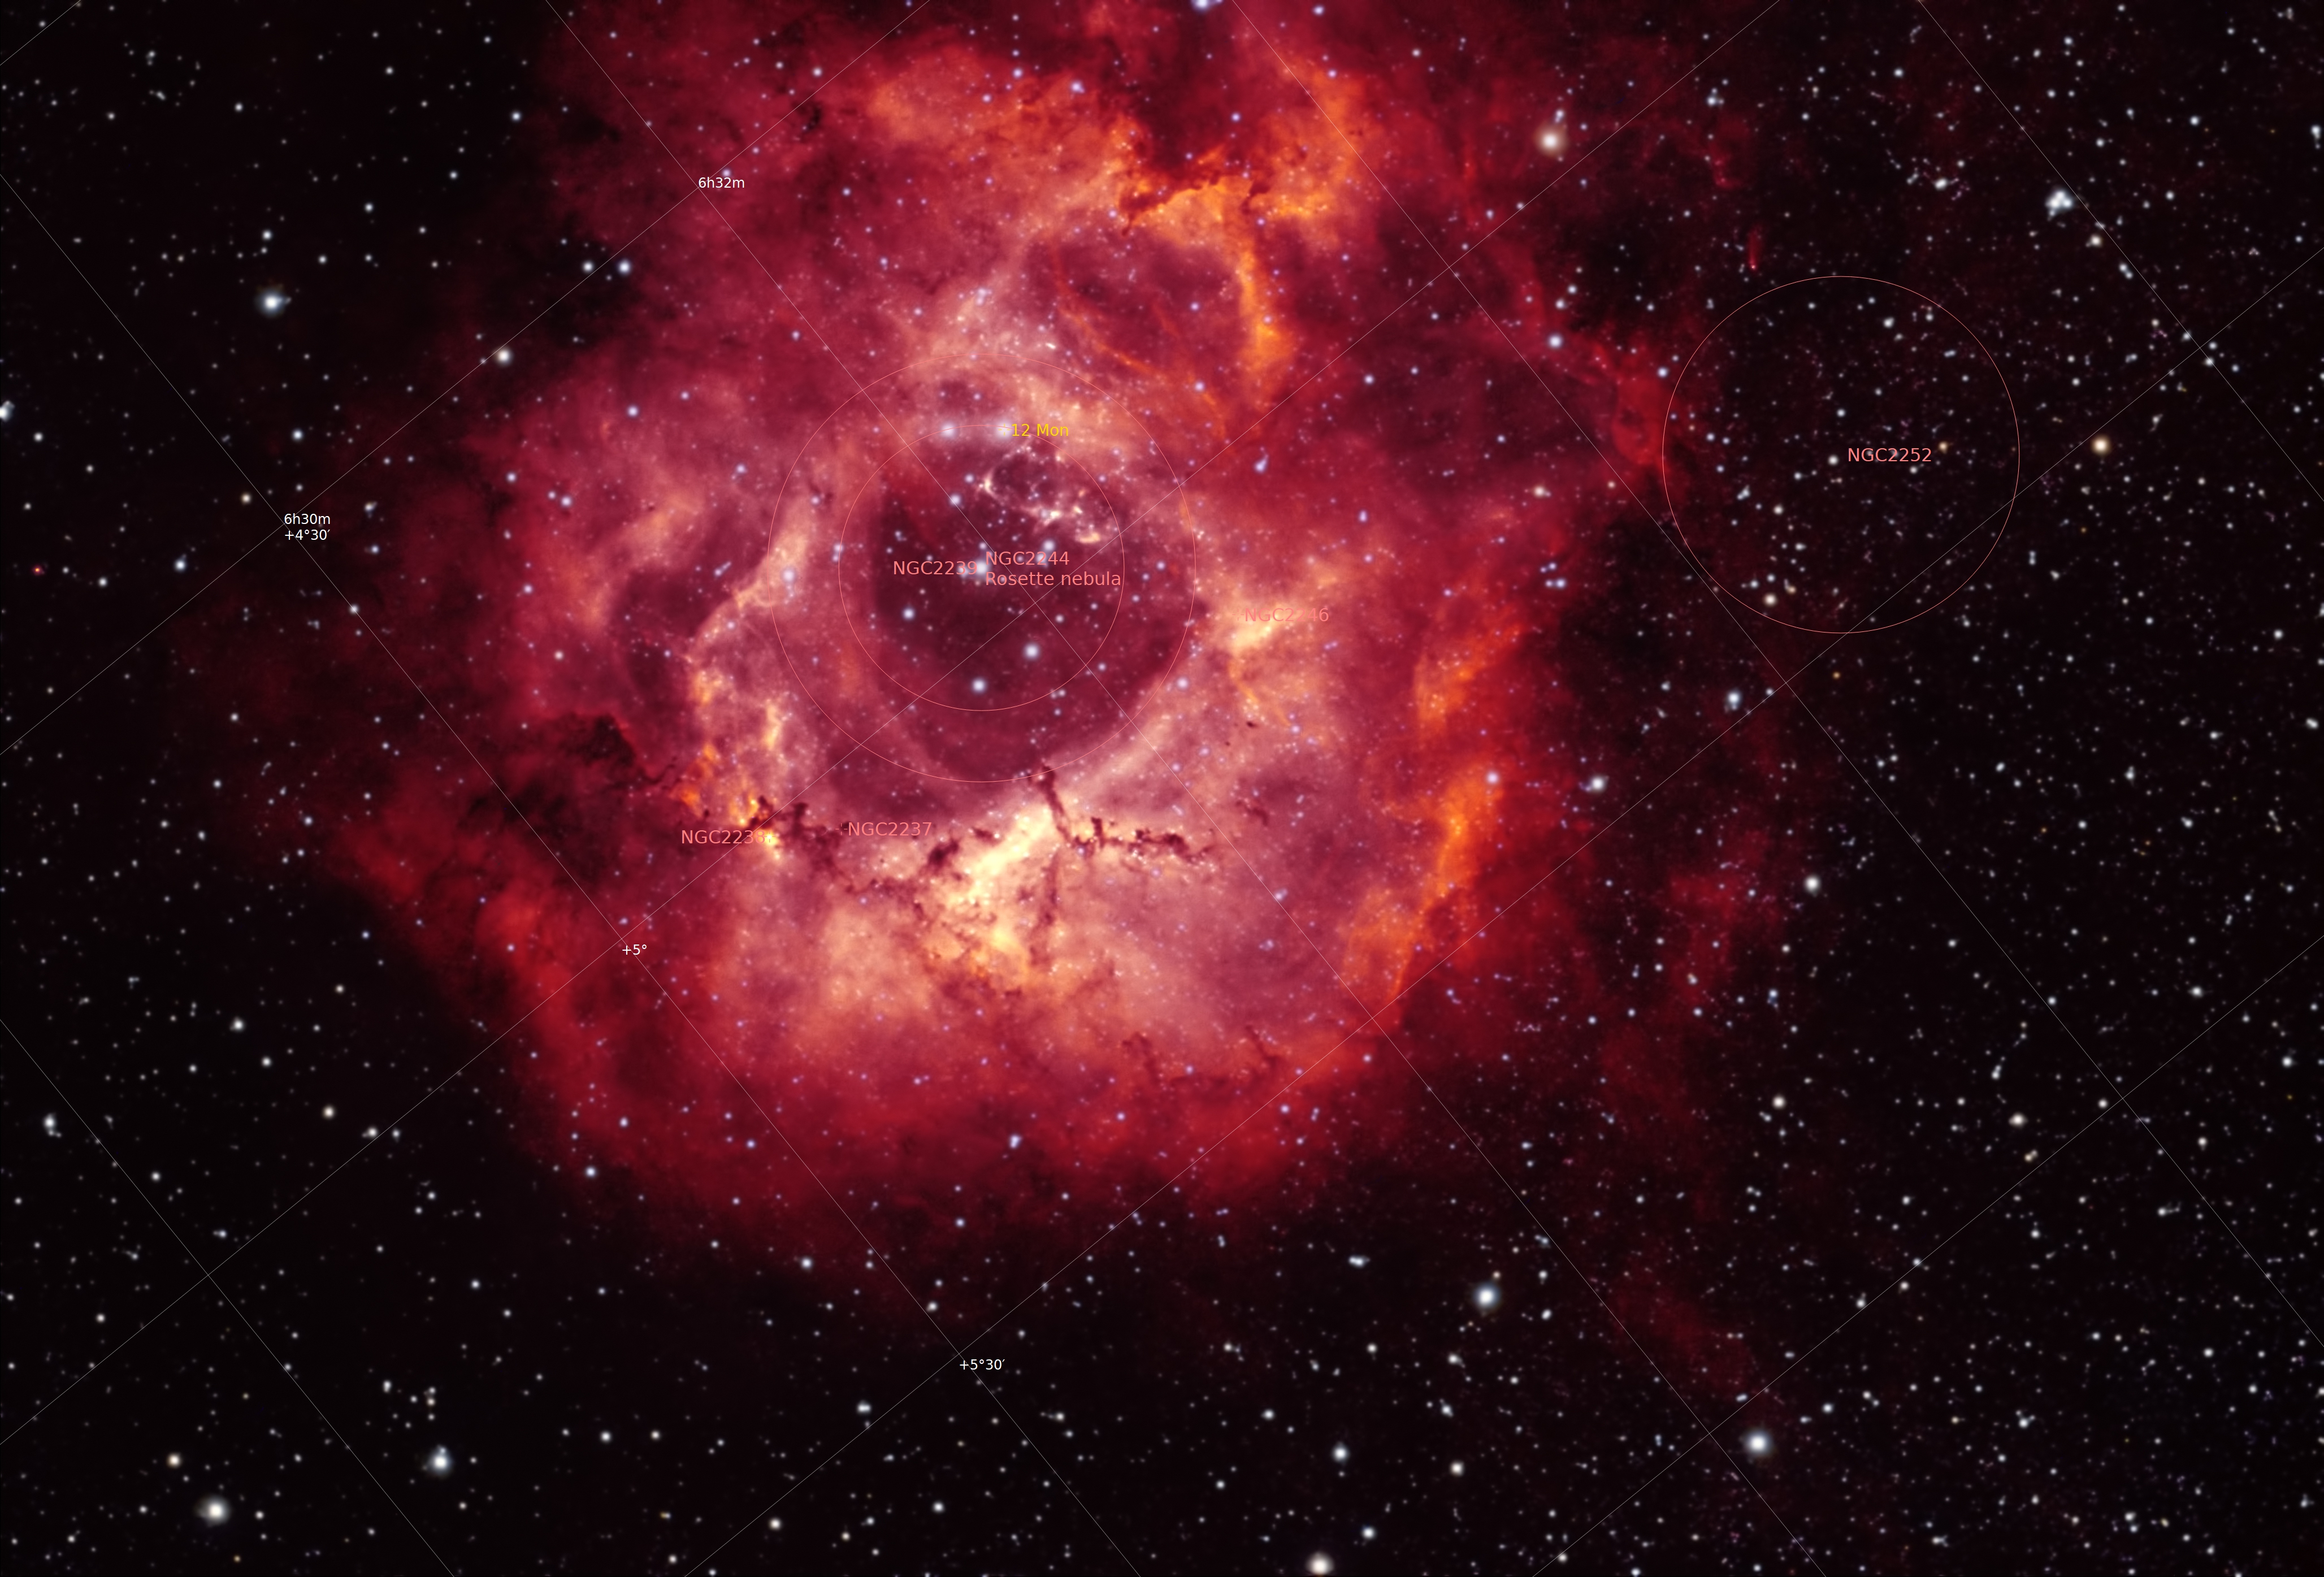 NGC2244_topaz_jpg_Annotated.jpg